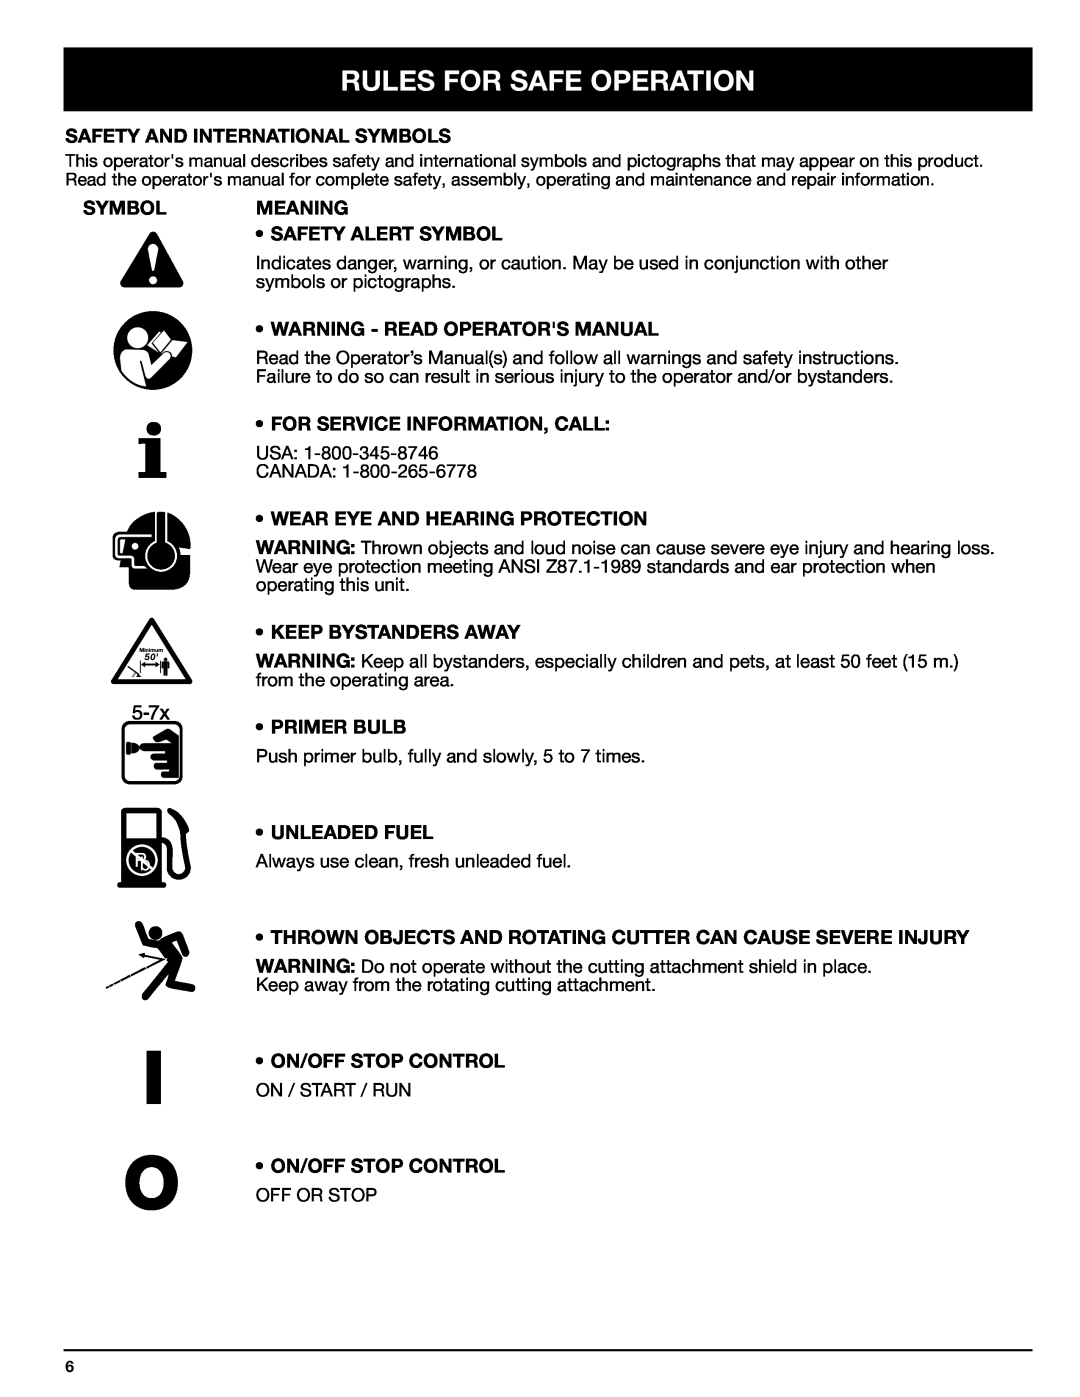 Ryobi 770rEB manual Safety And International Symbols, Symbolmeaning Safety Alert Symbol, Warning - Read Operators Manual 